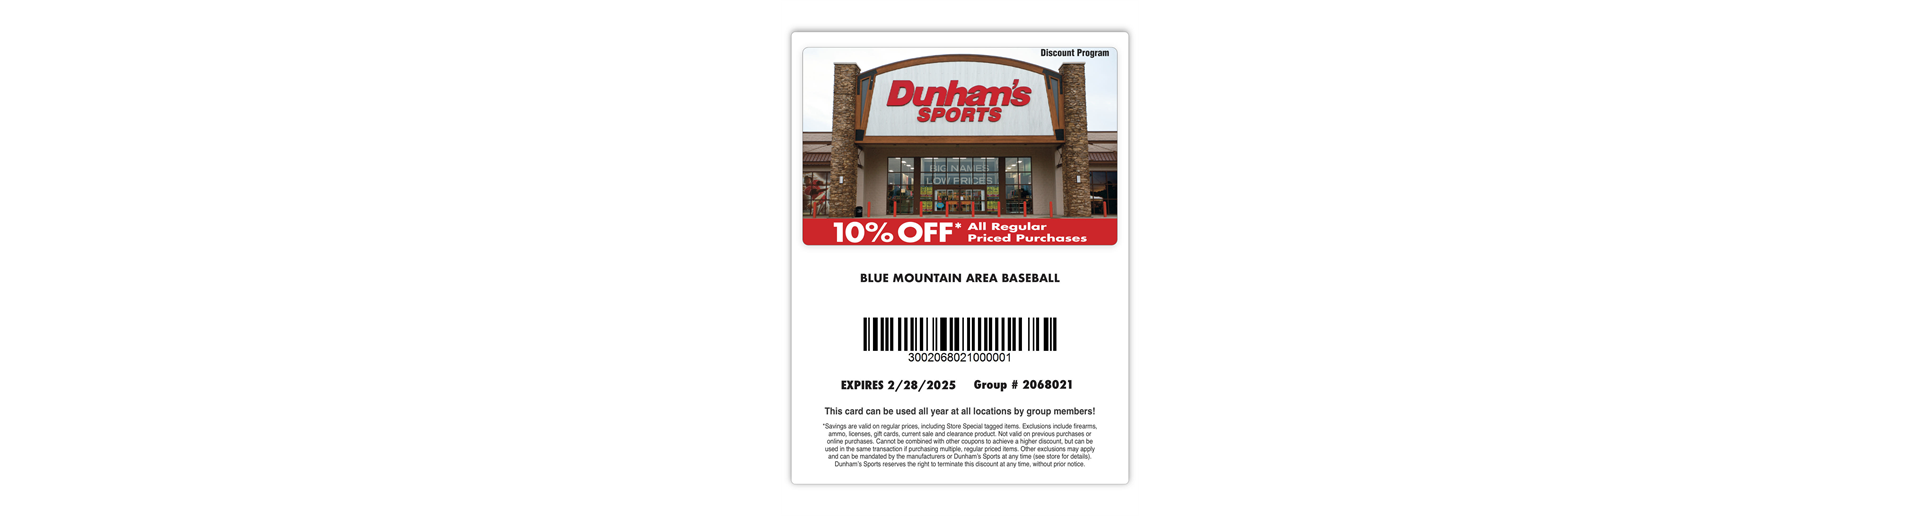 Dunham's 10% all year